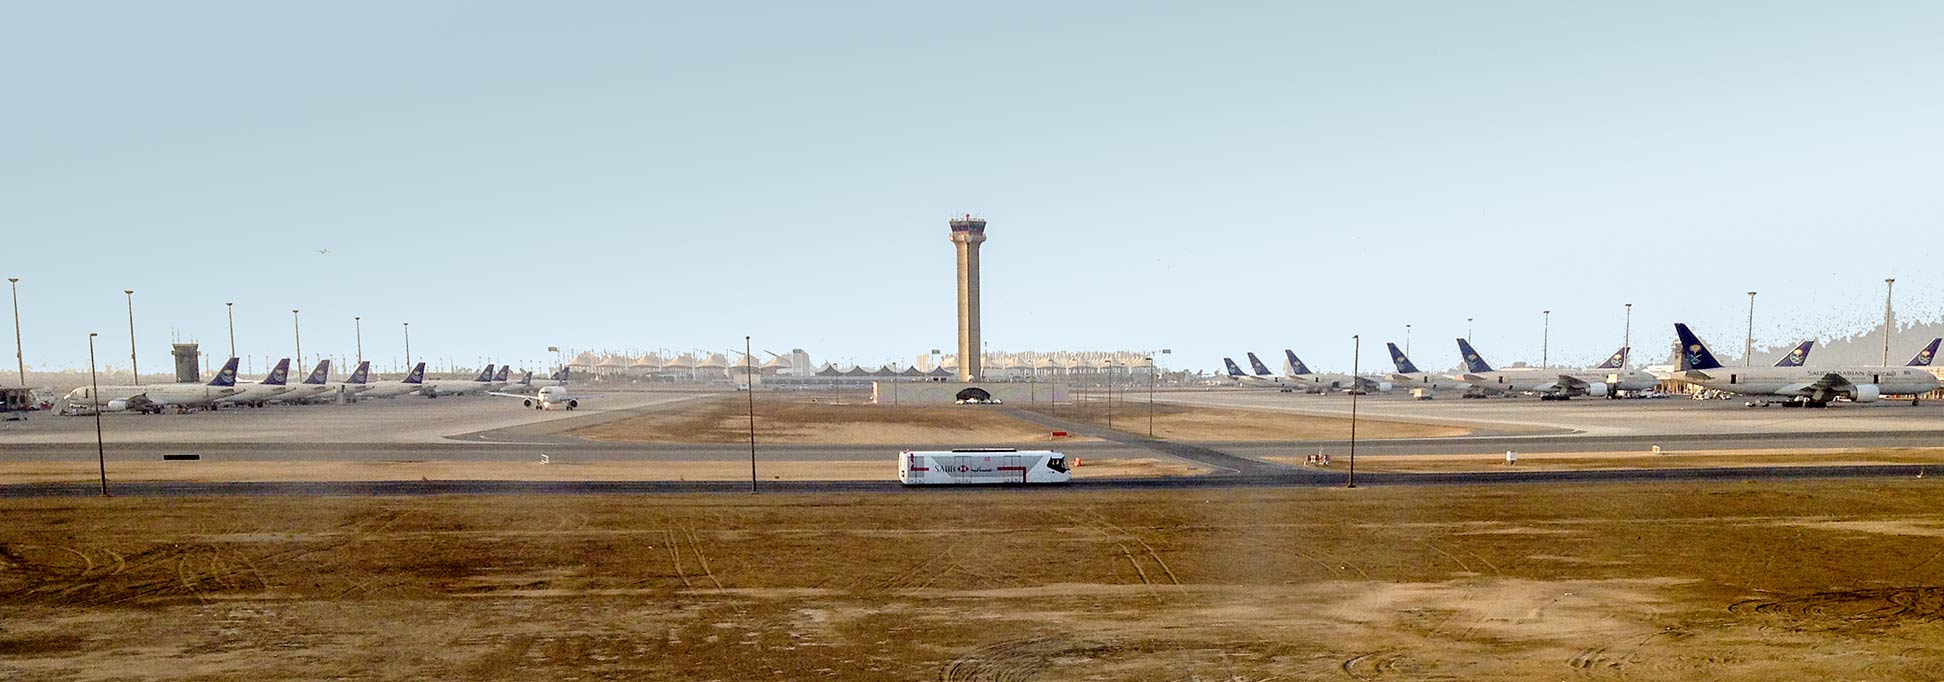 King Abdulaziz International Airport, Jeddah, Saudi Arabia